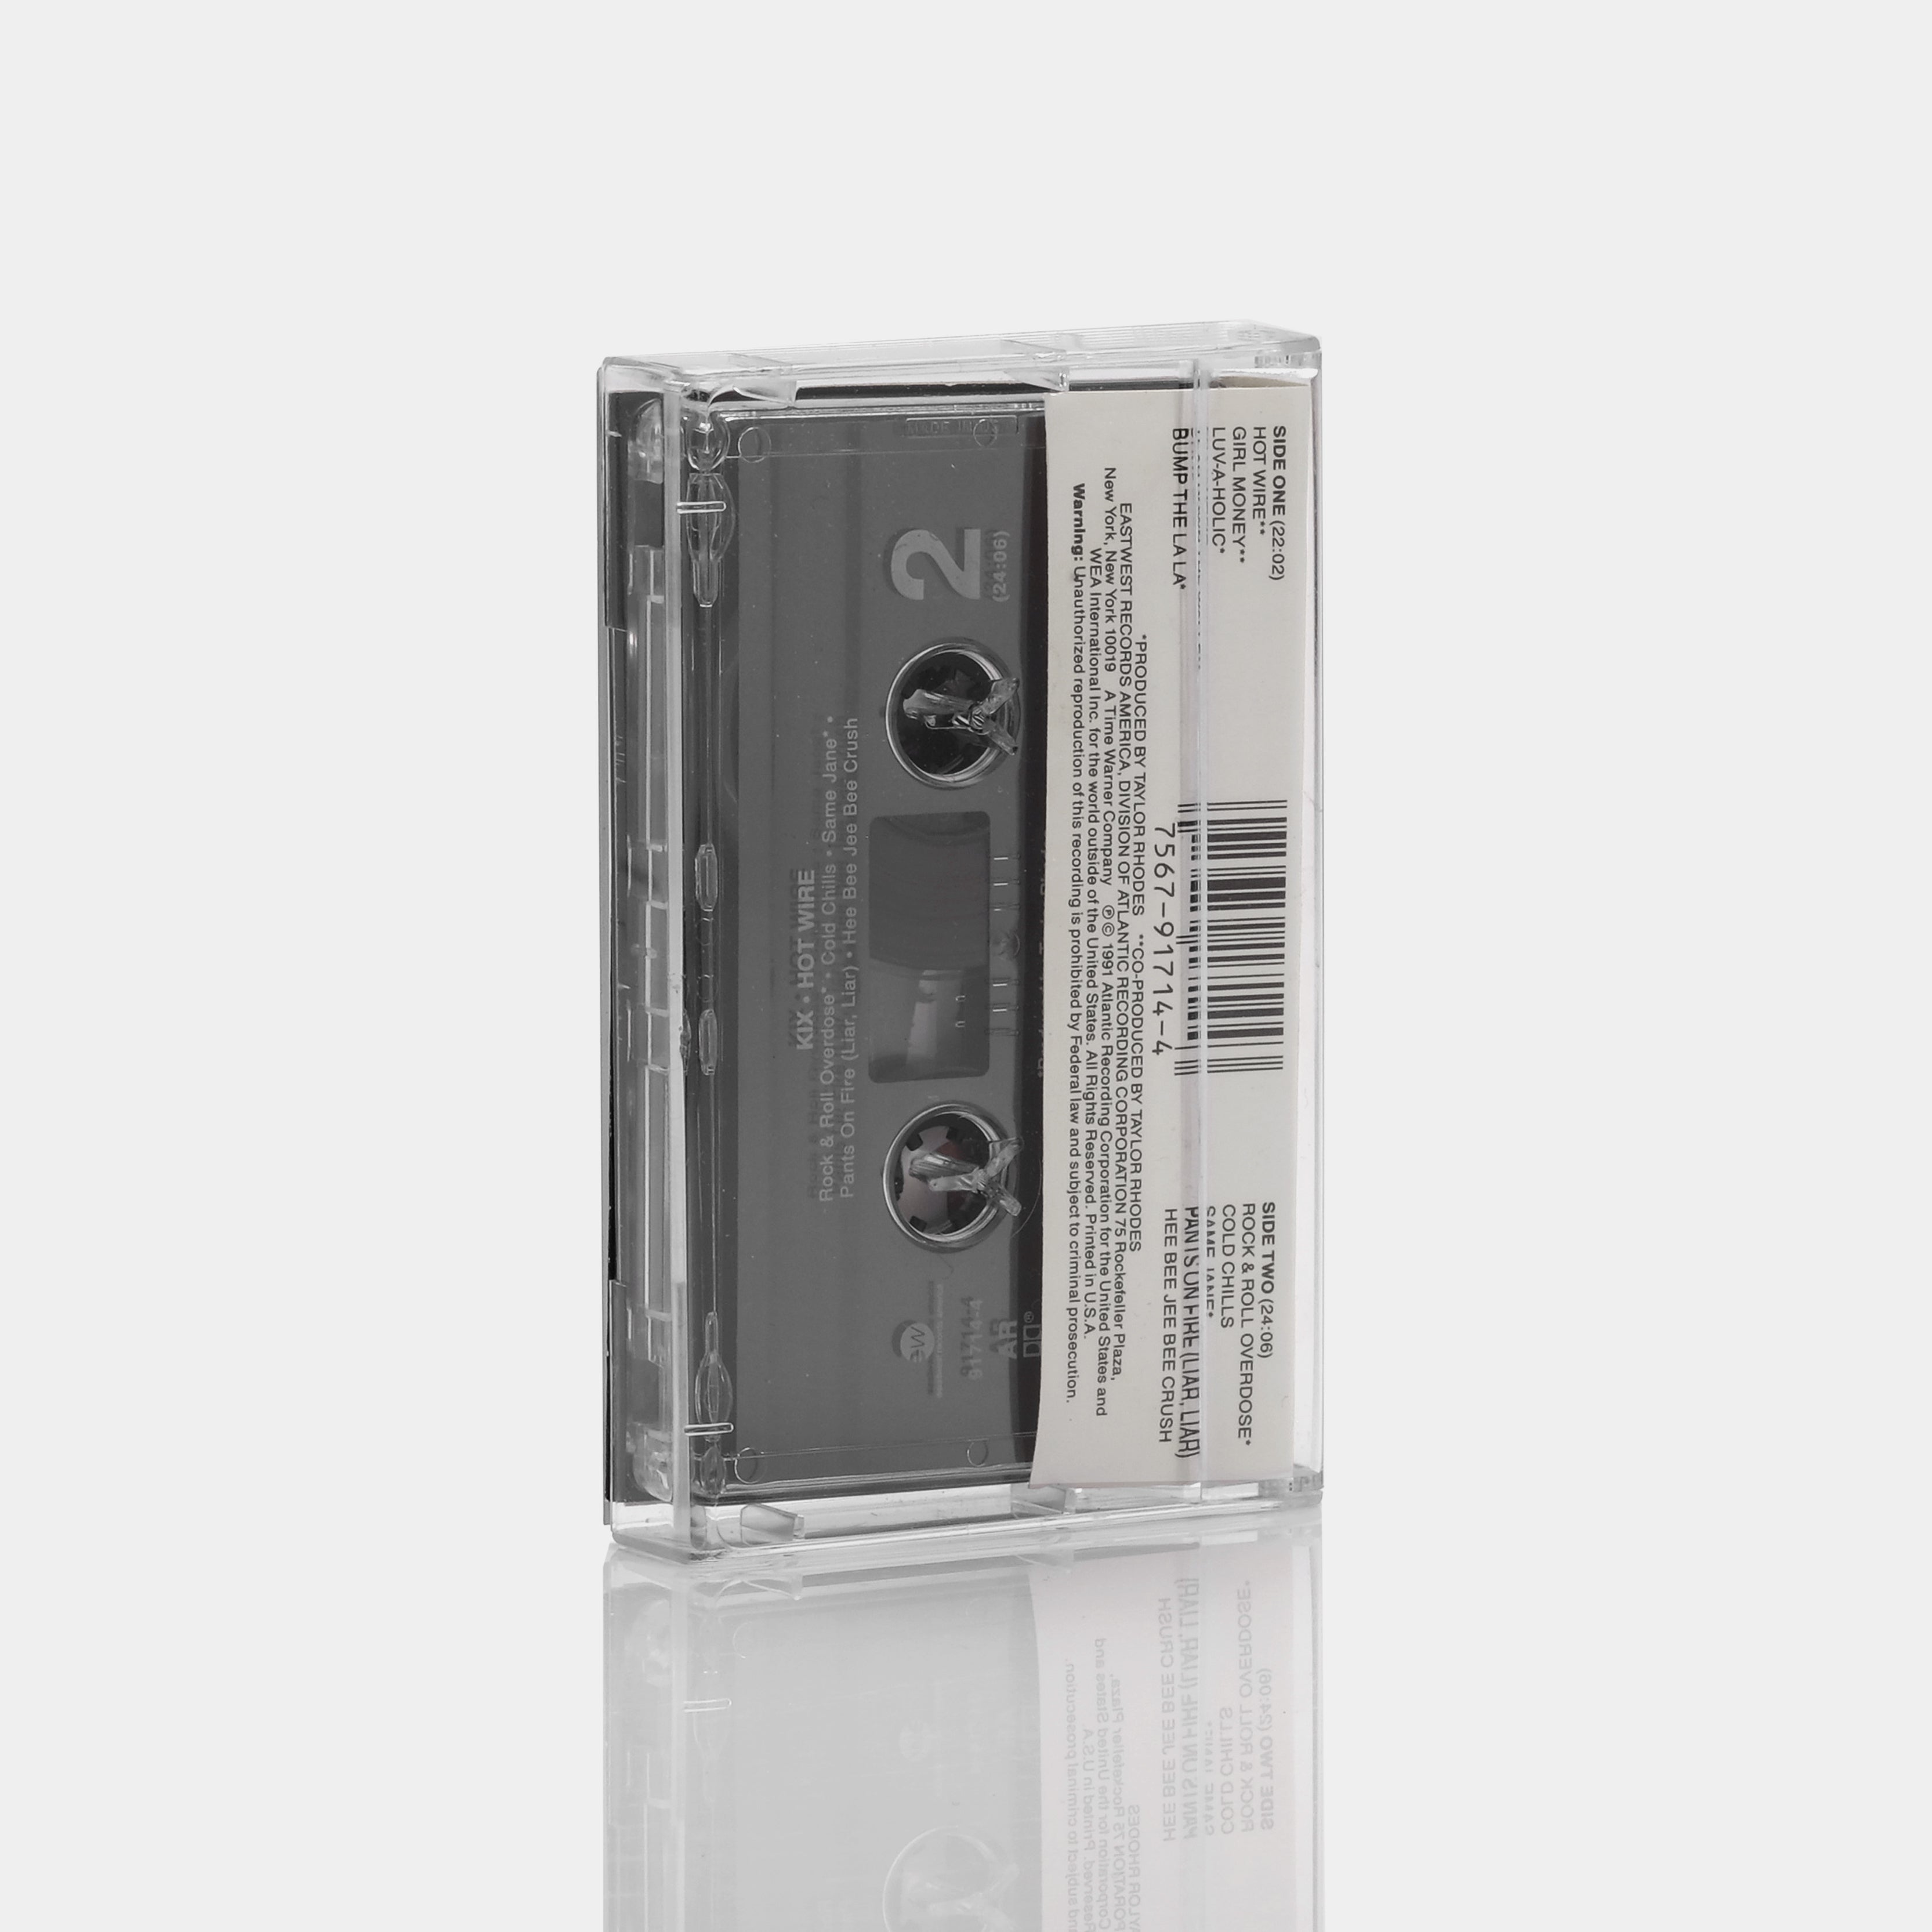 Kix - Hot Wire Cassette Tape